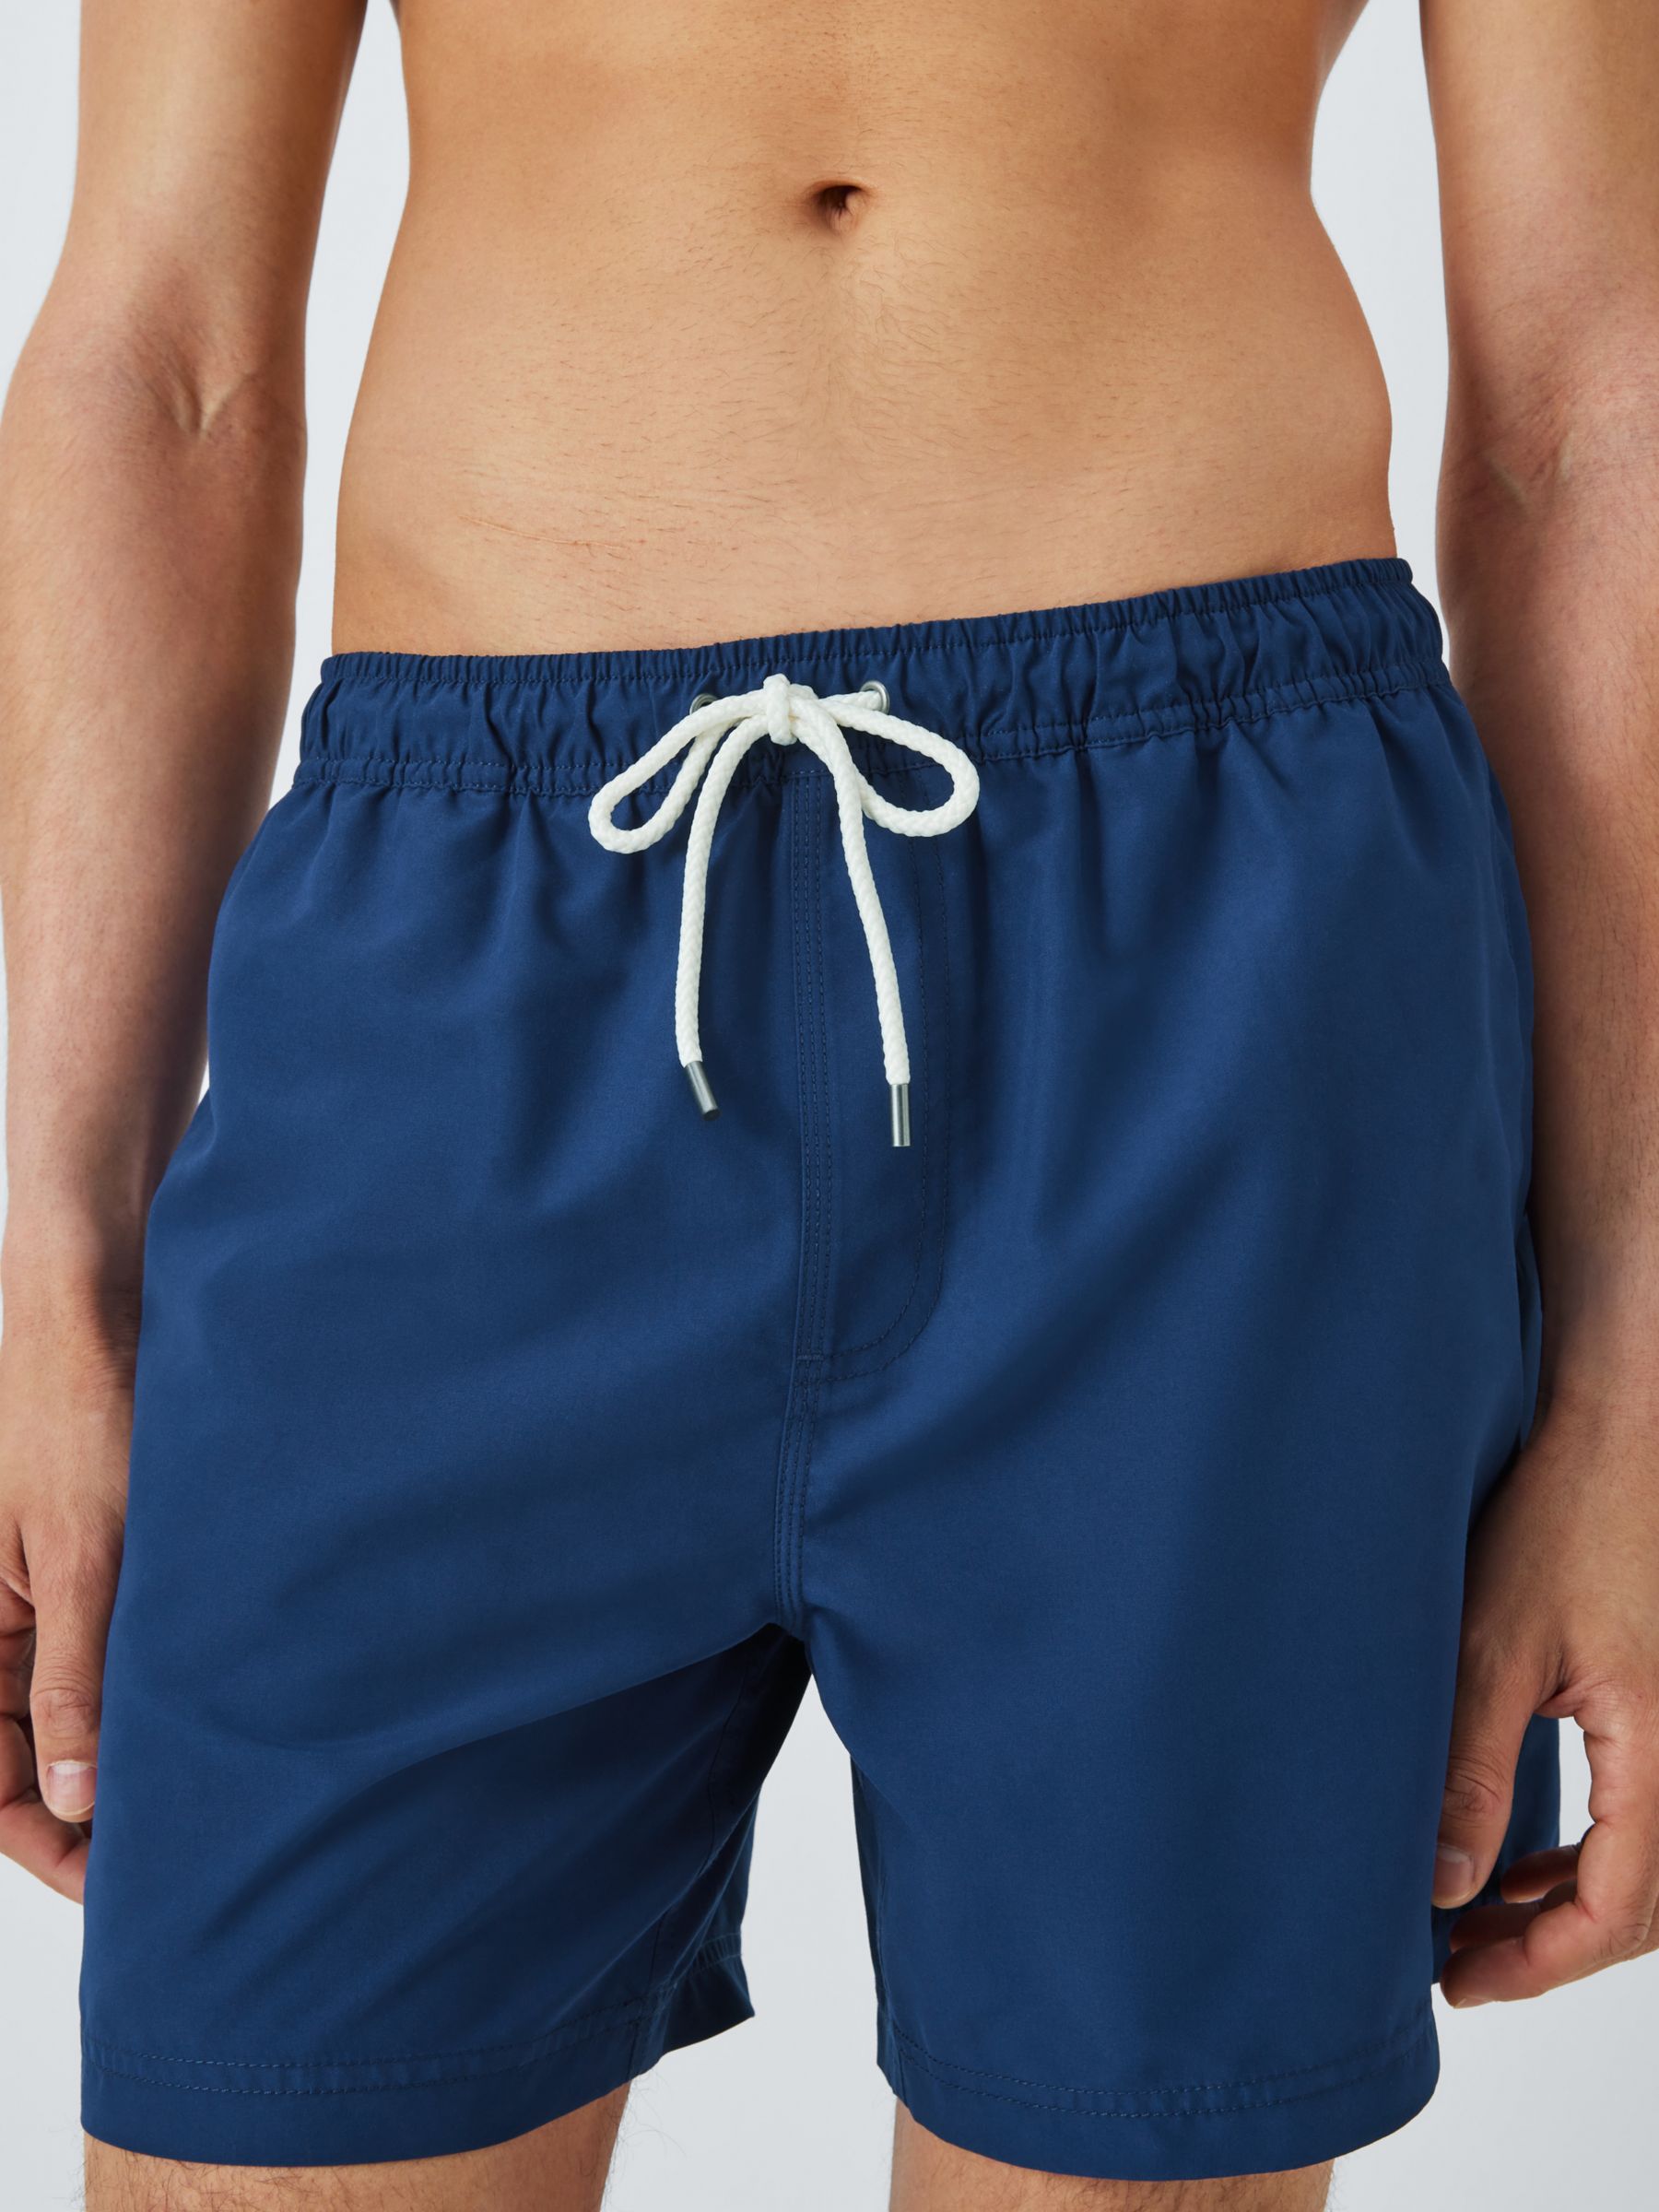 John Lewis Recycled Polyester Swim Shorts, Navy, M